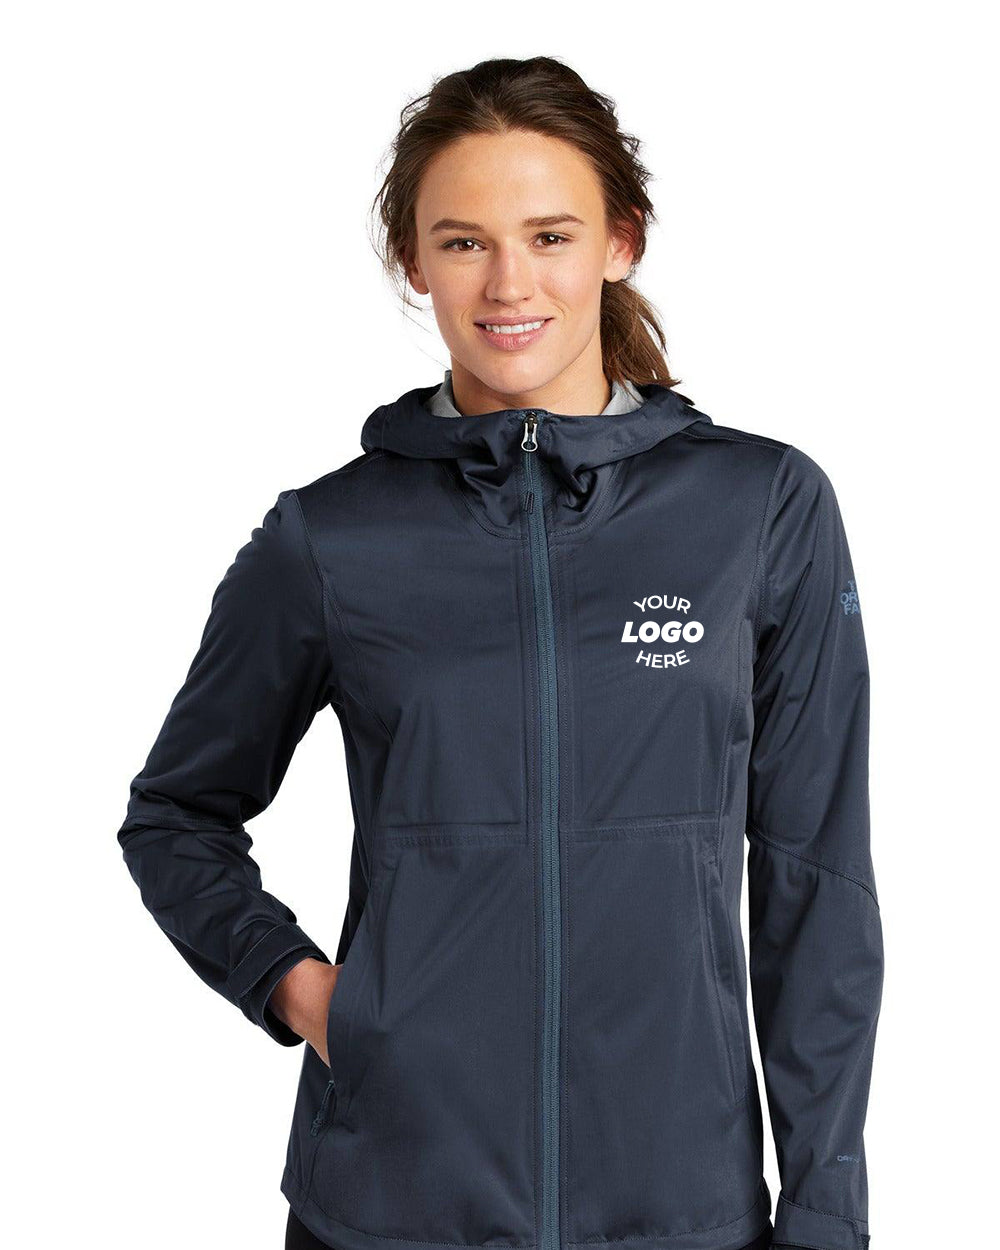 Ladies Hoodie Jacket with Chain - Winter Jacket - Supplier